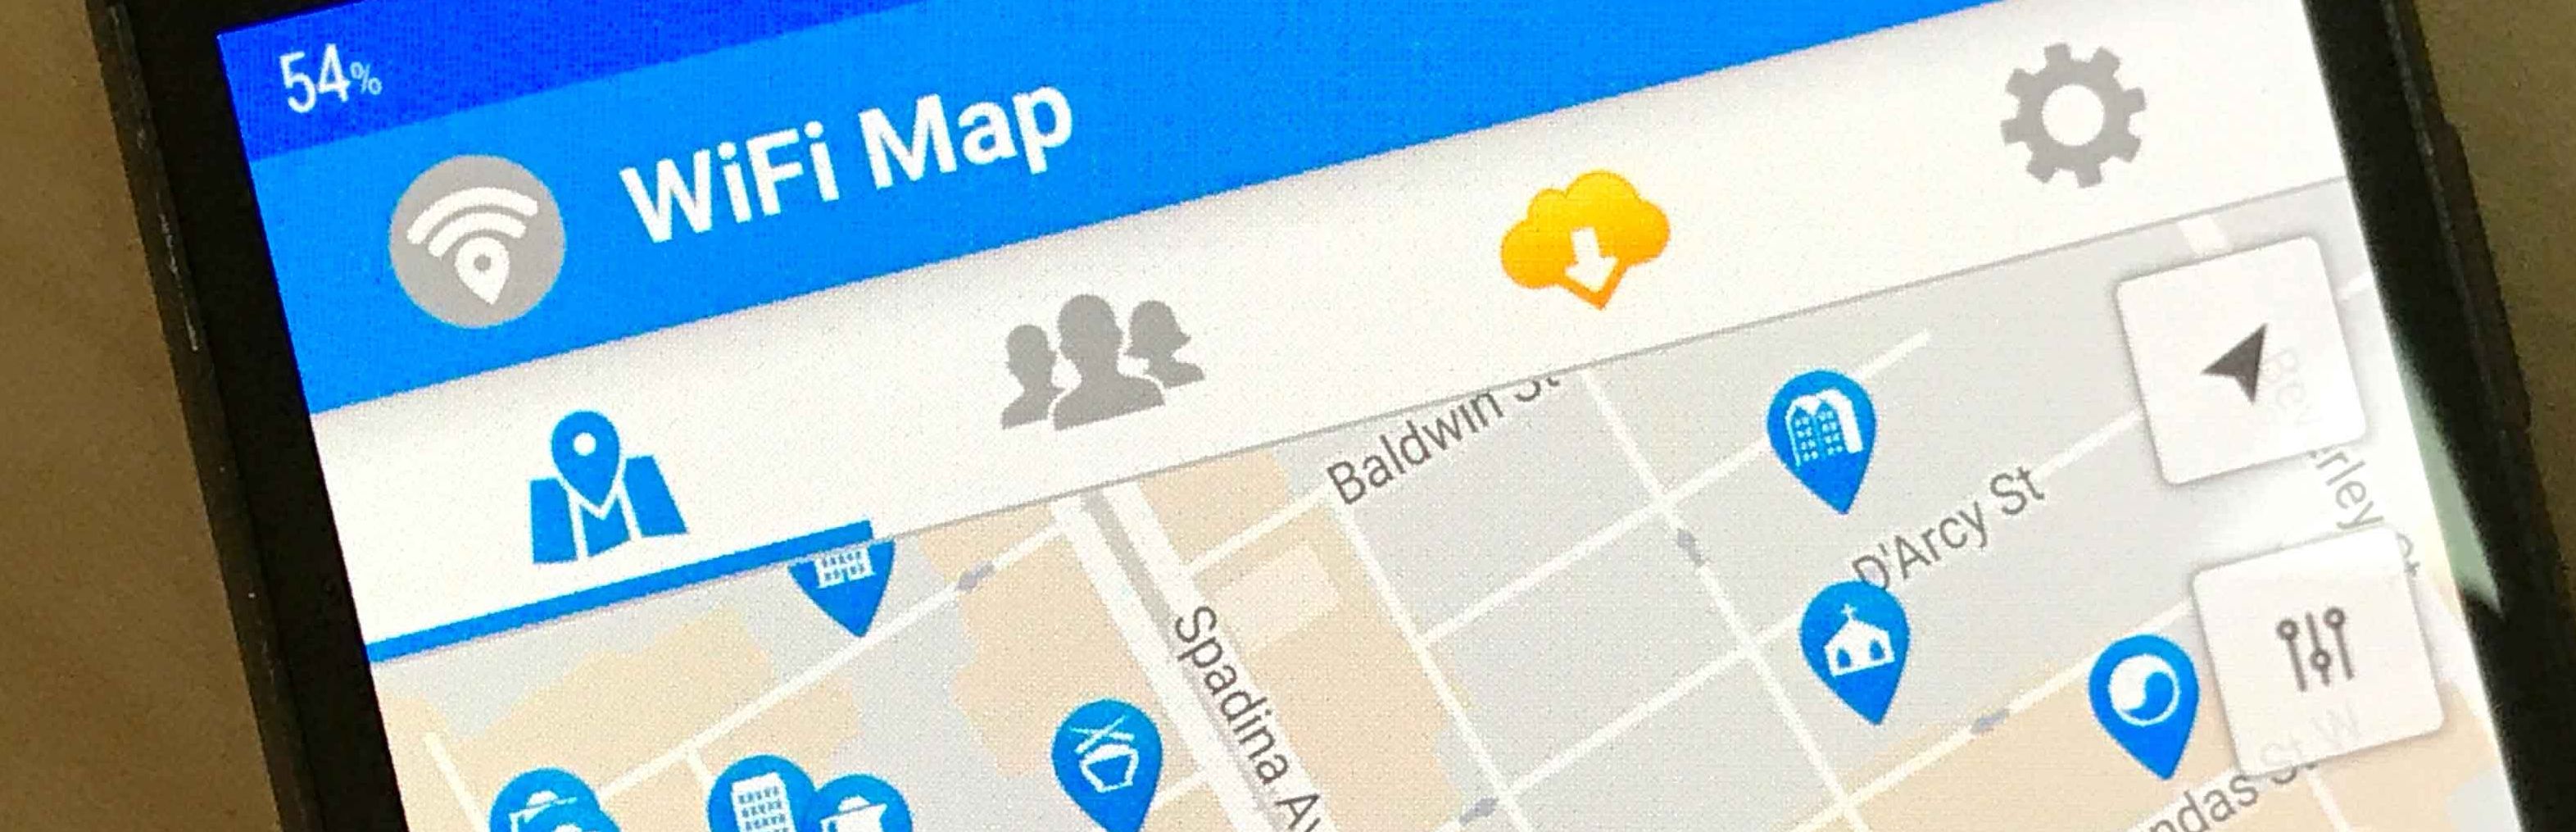 wi-fi-map-app